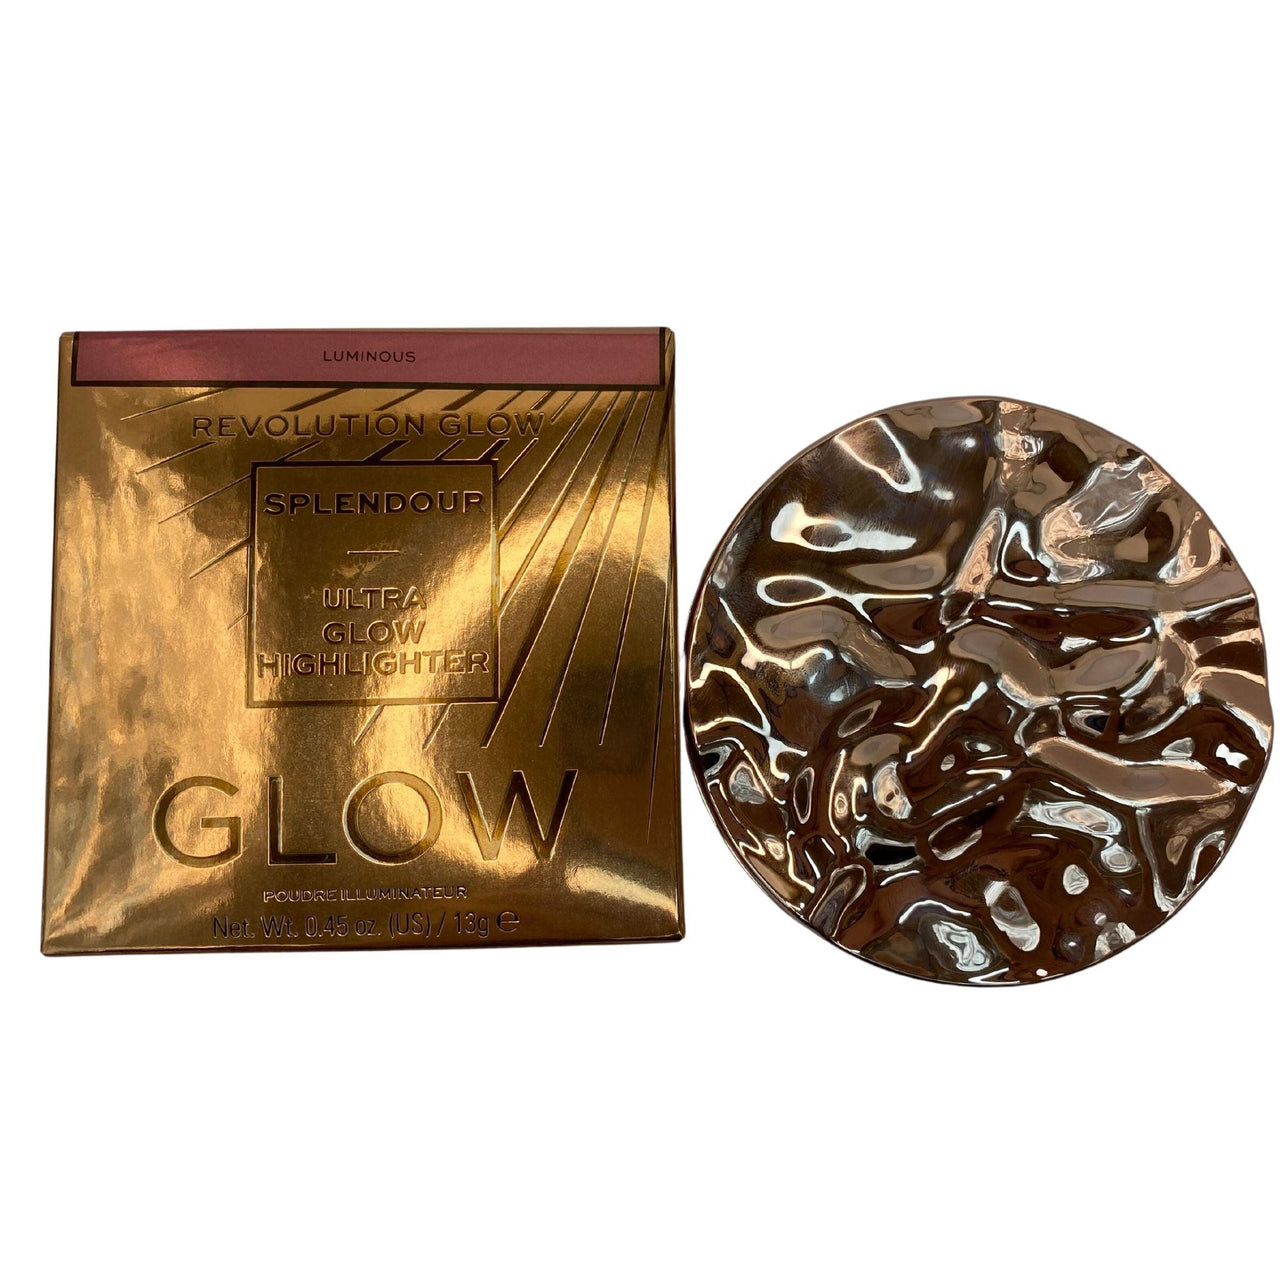 Luminous Revolution Glow Splendour Ultra Glow Highlighter ( 72 Pcs Box ) - Discount Wholesalers Inc